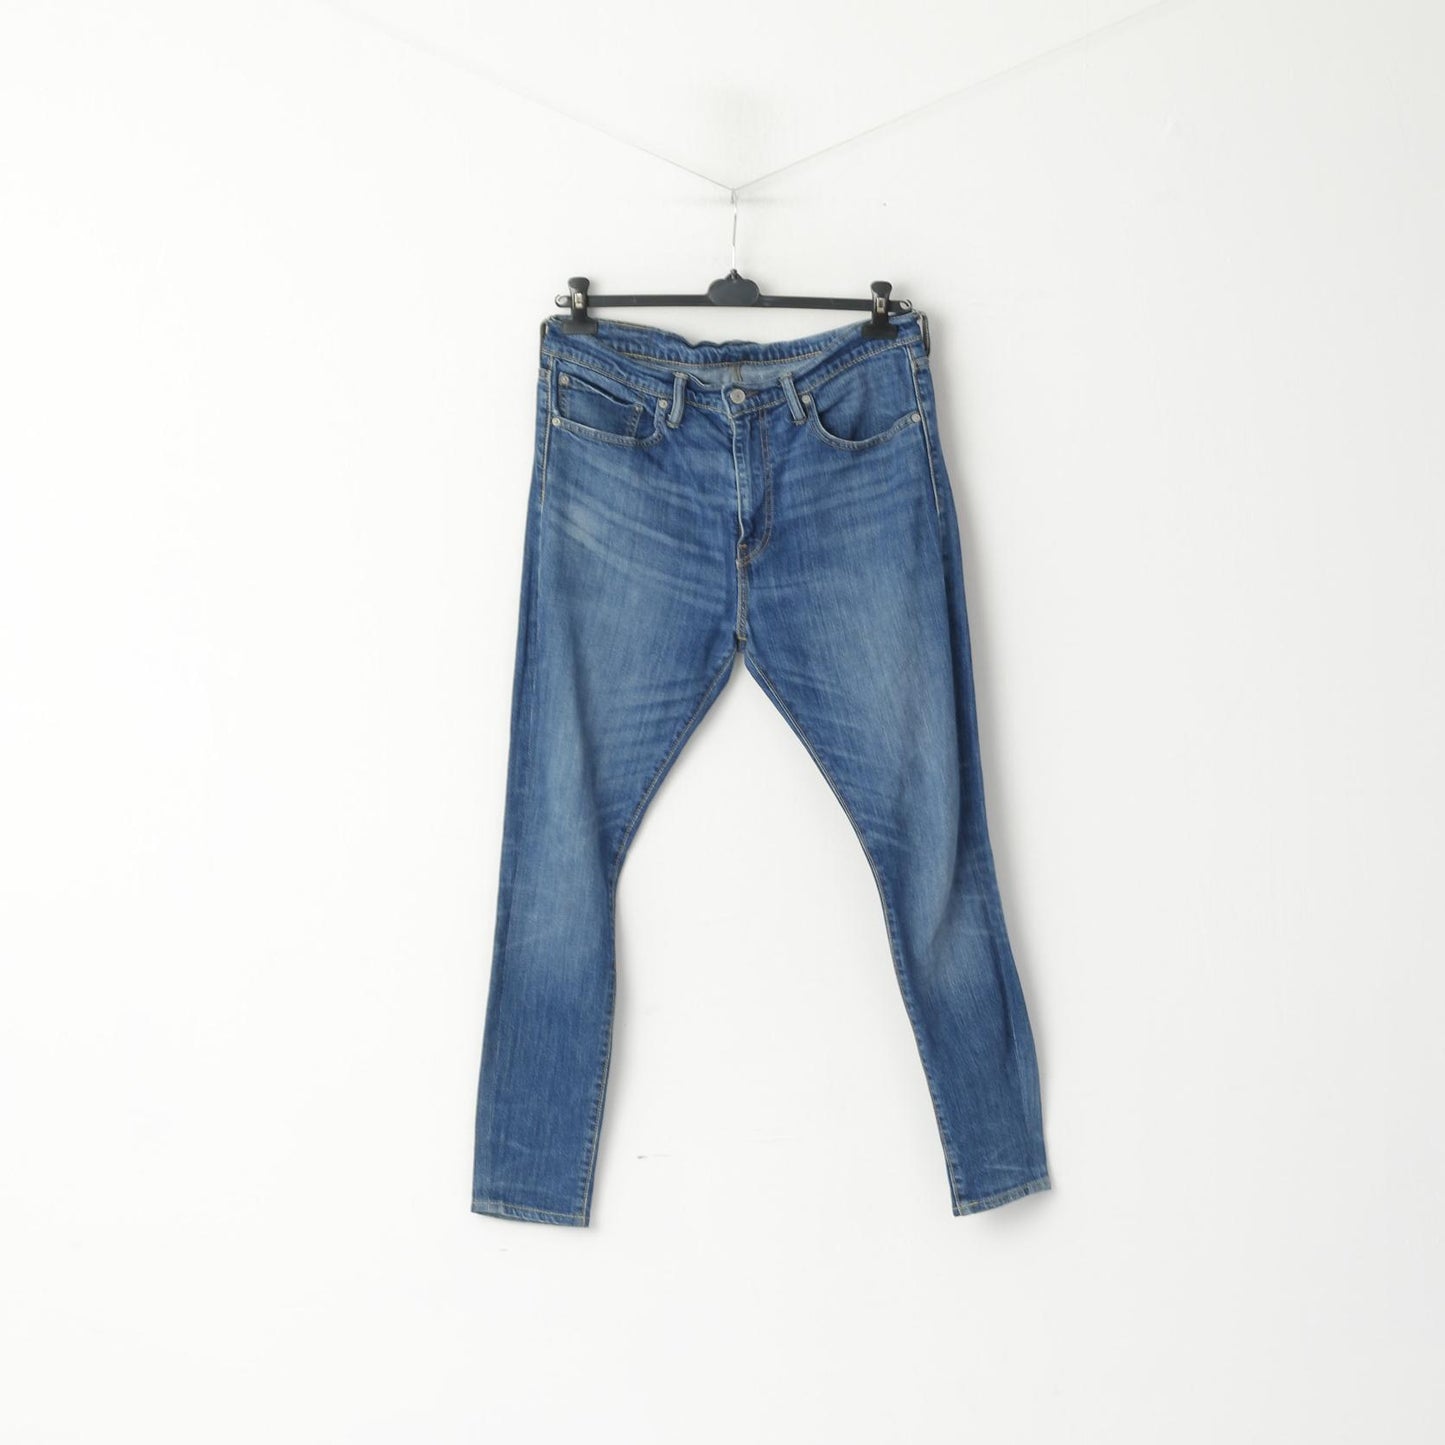 Levi's Men W 34 L 32 Jeans Trousers Blue Denim 510 Slim Skinny Fit Pants